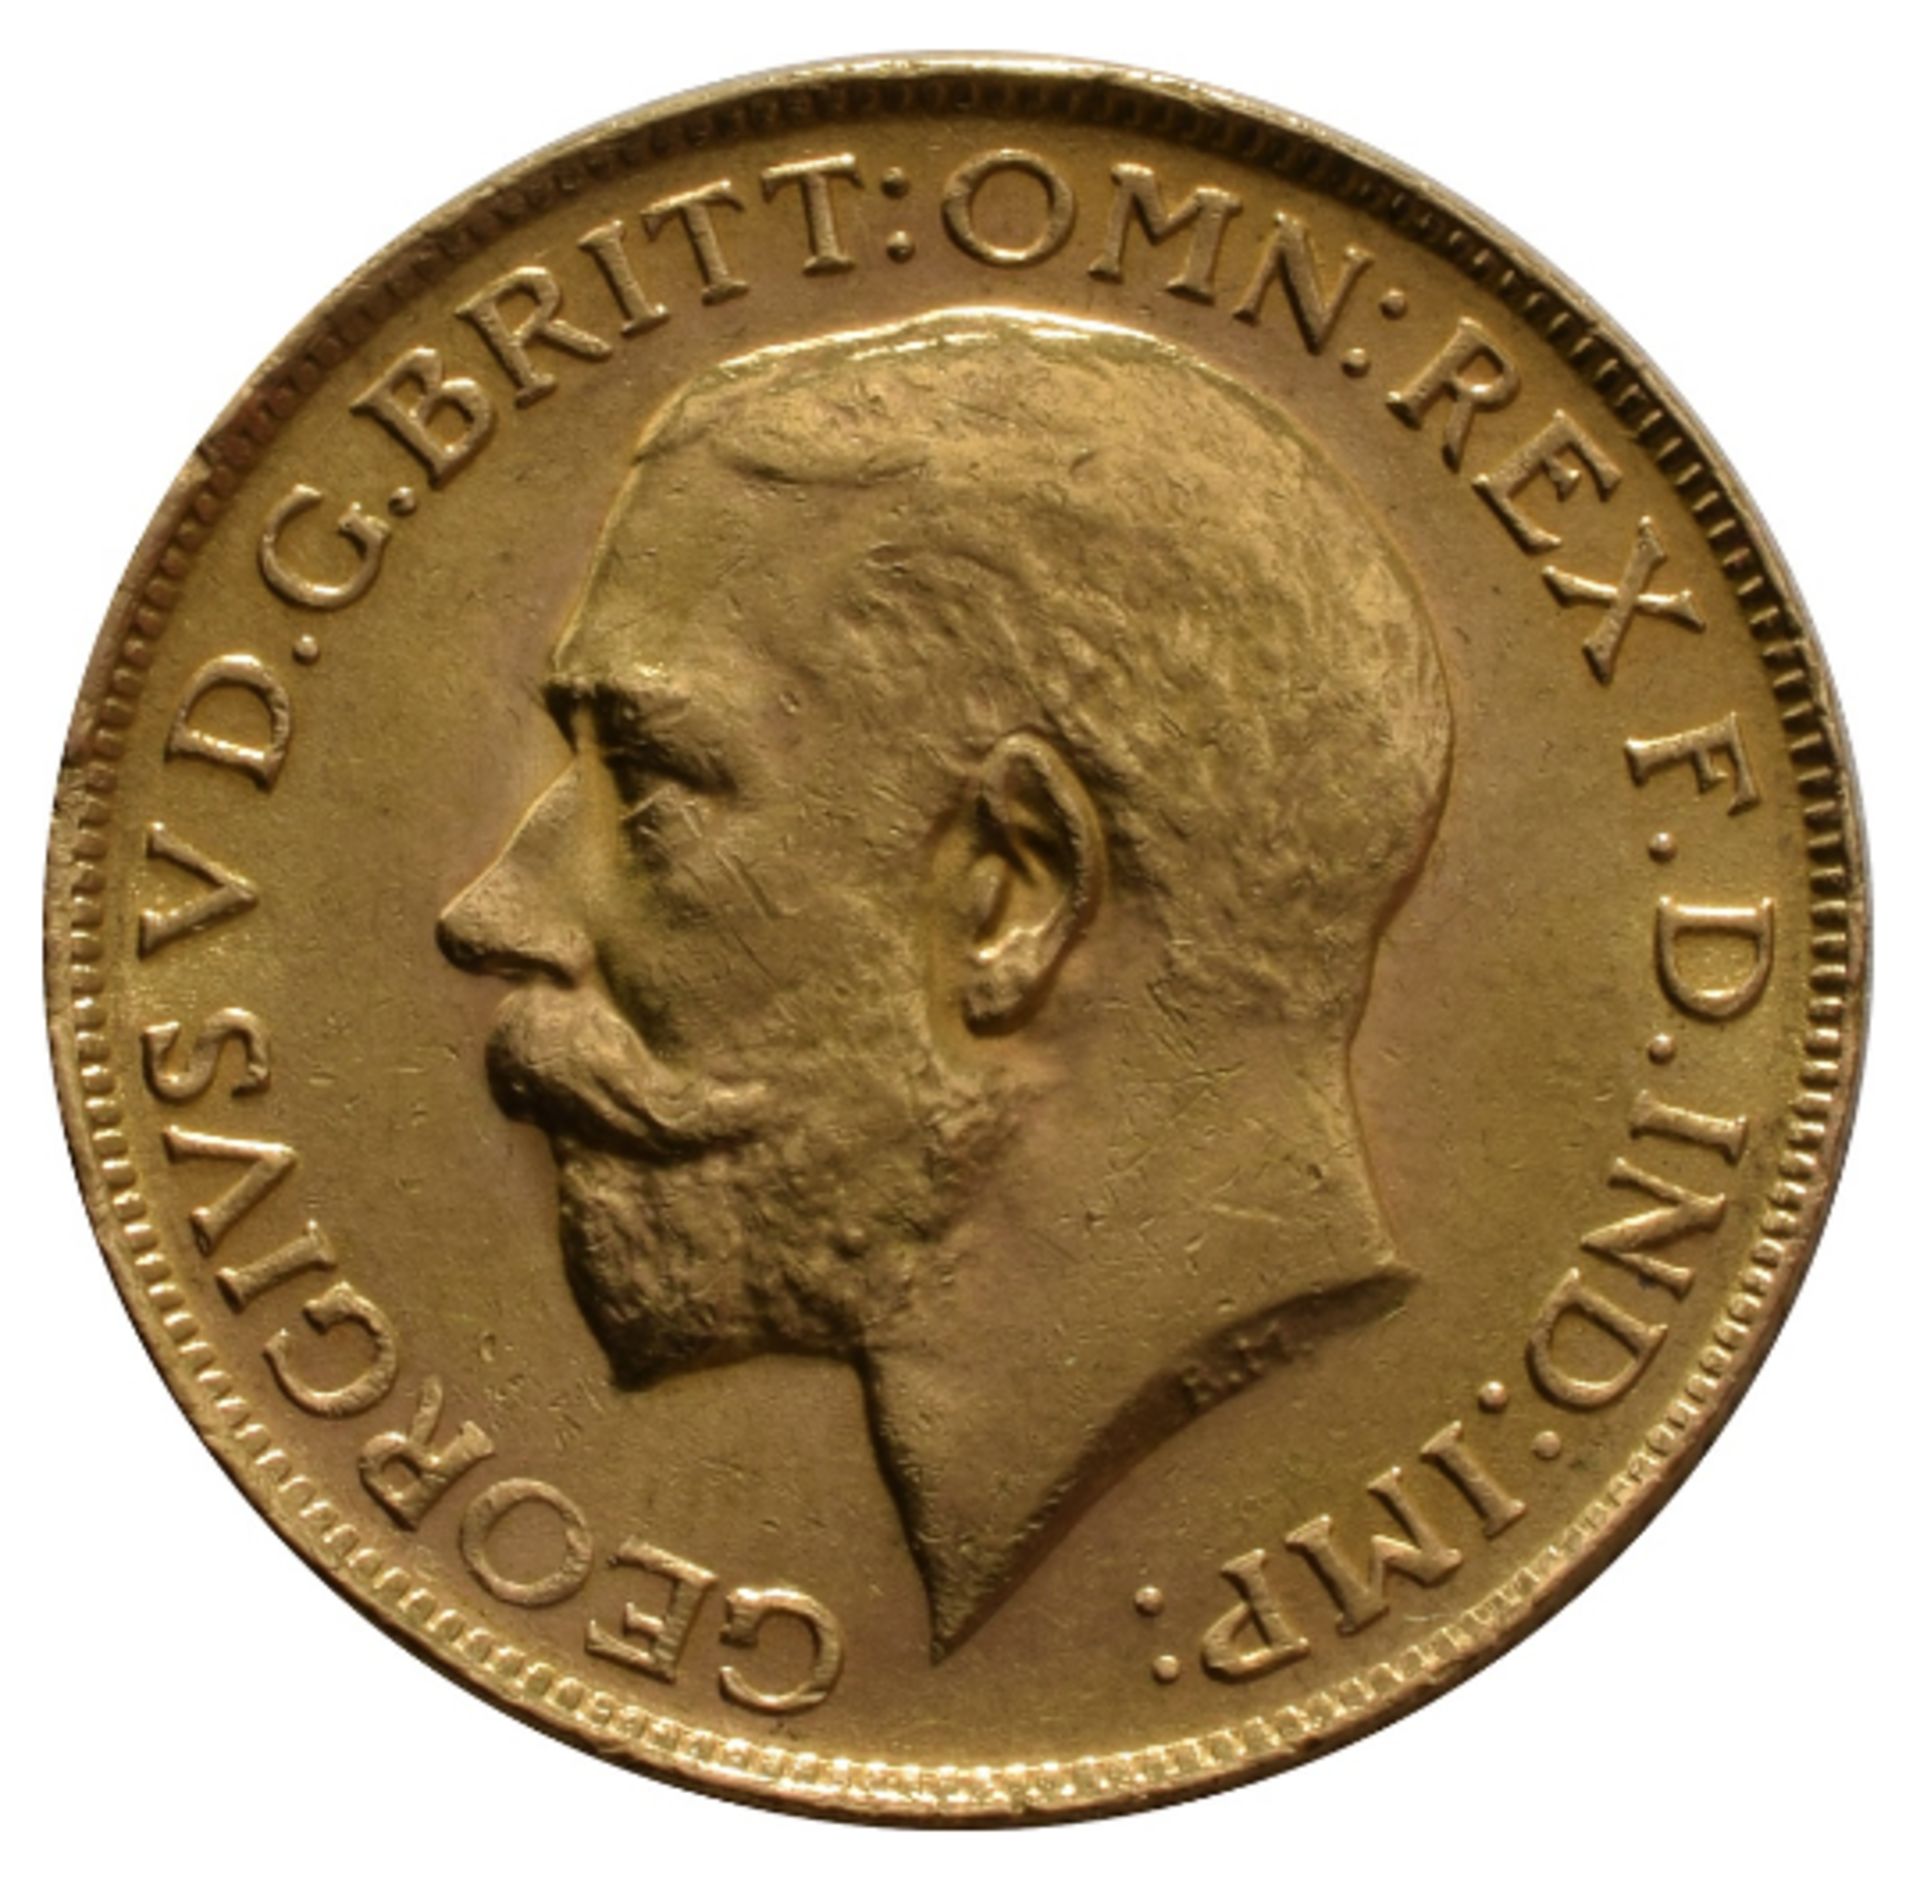 1927 - King george V - Full Gold sovereign - solid gold - 8 grams - Image 2 of 2